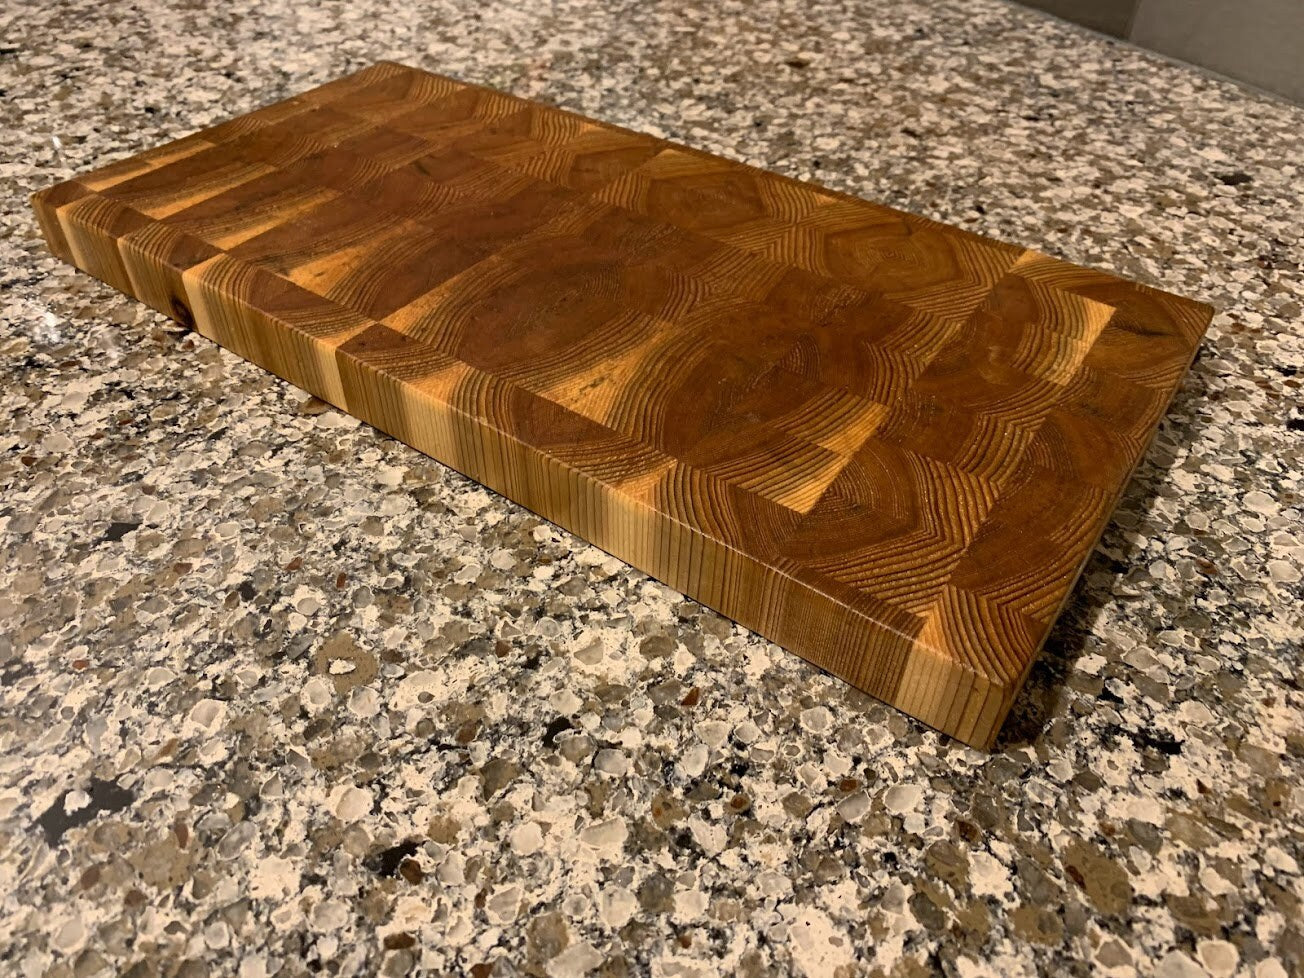 Cedar Cutting Board End Grain Butcher Block - Large Wooden Cutting Board for Kitchen, Handmade from cedar hard wood